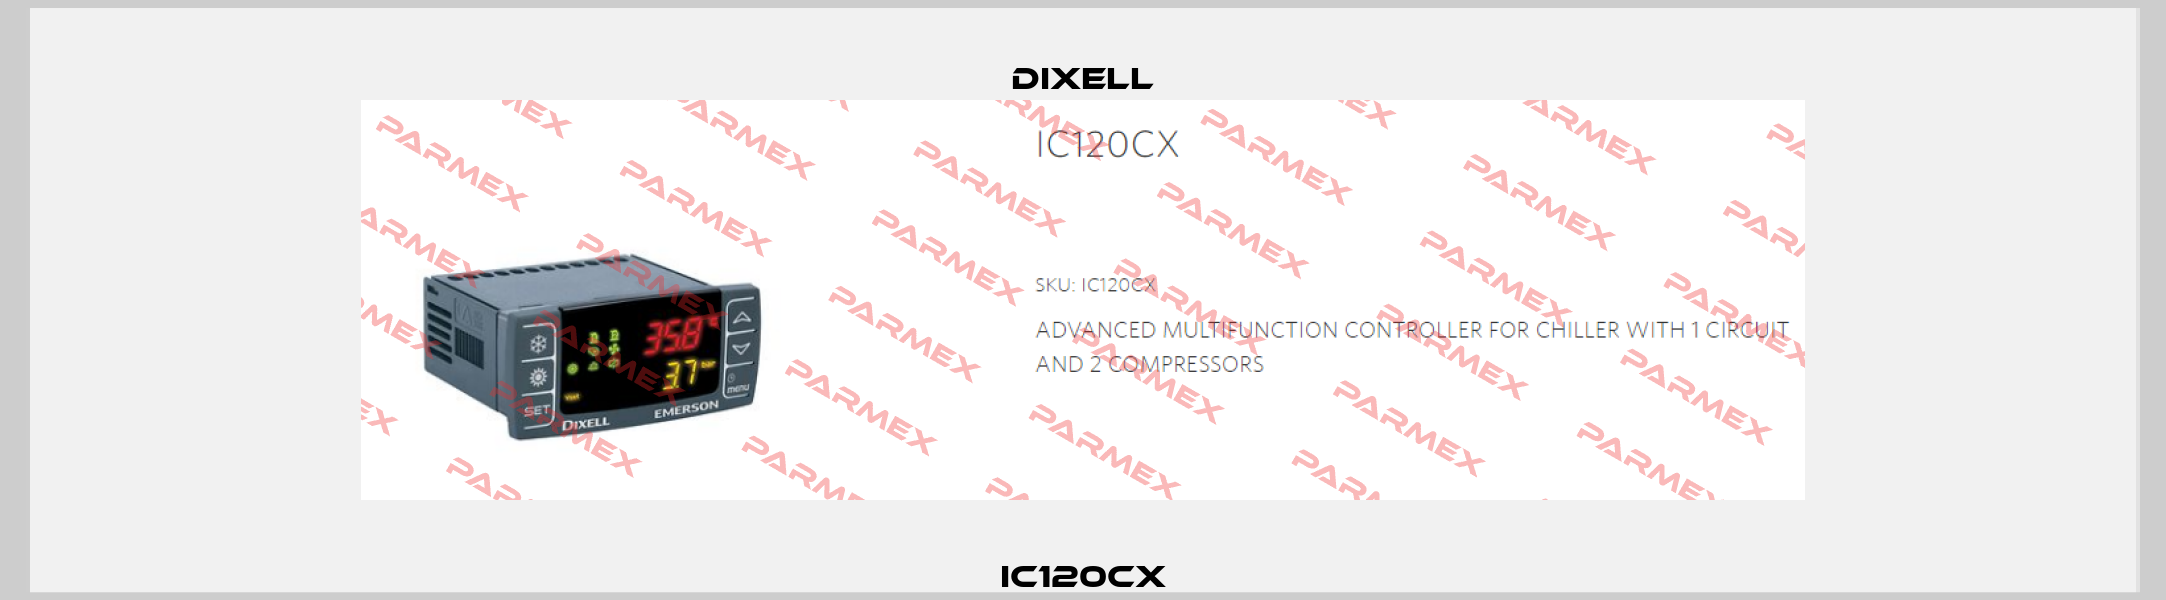 IC120CX Dixell